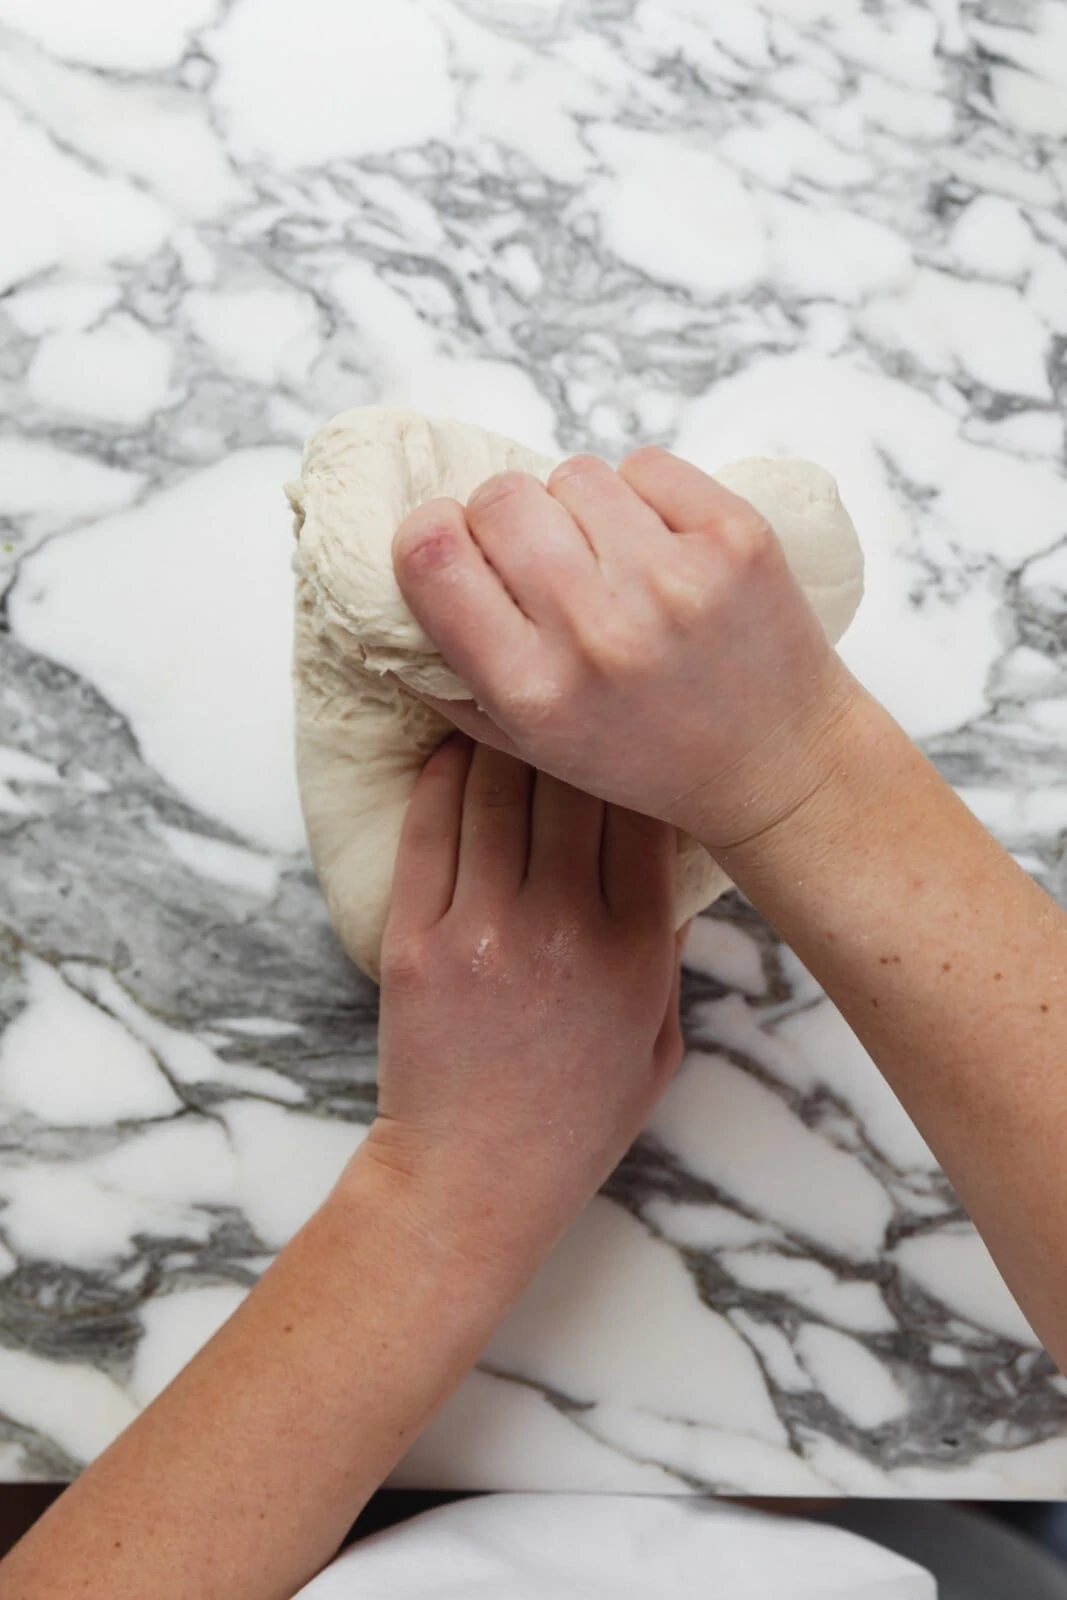 folding bagel dough over itself